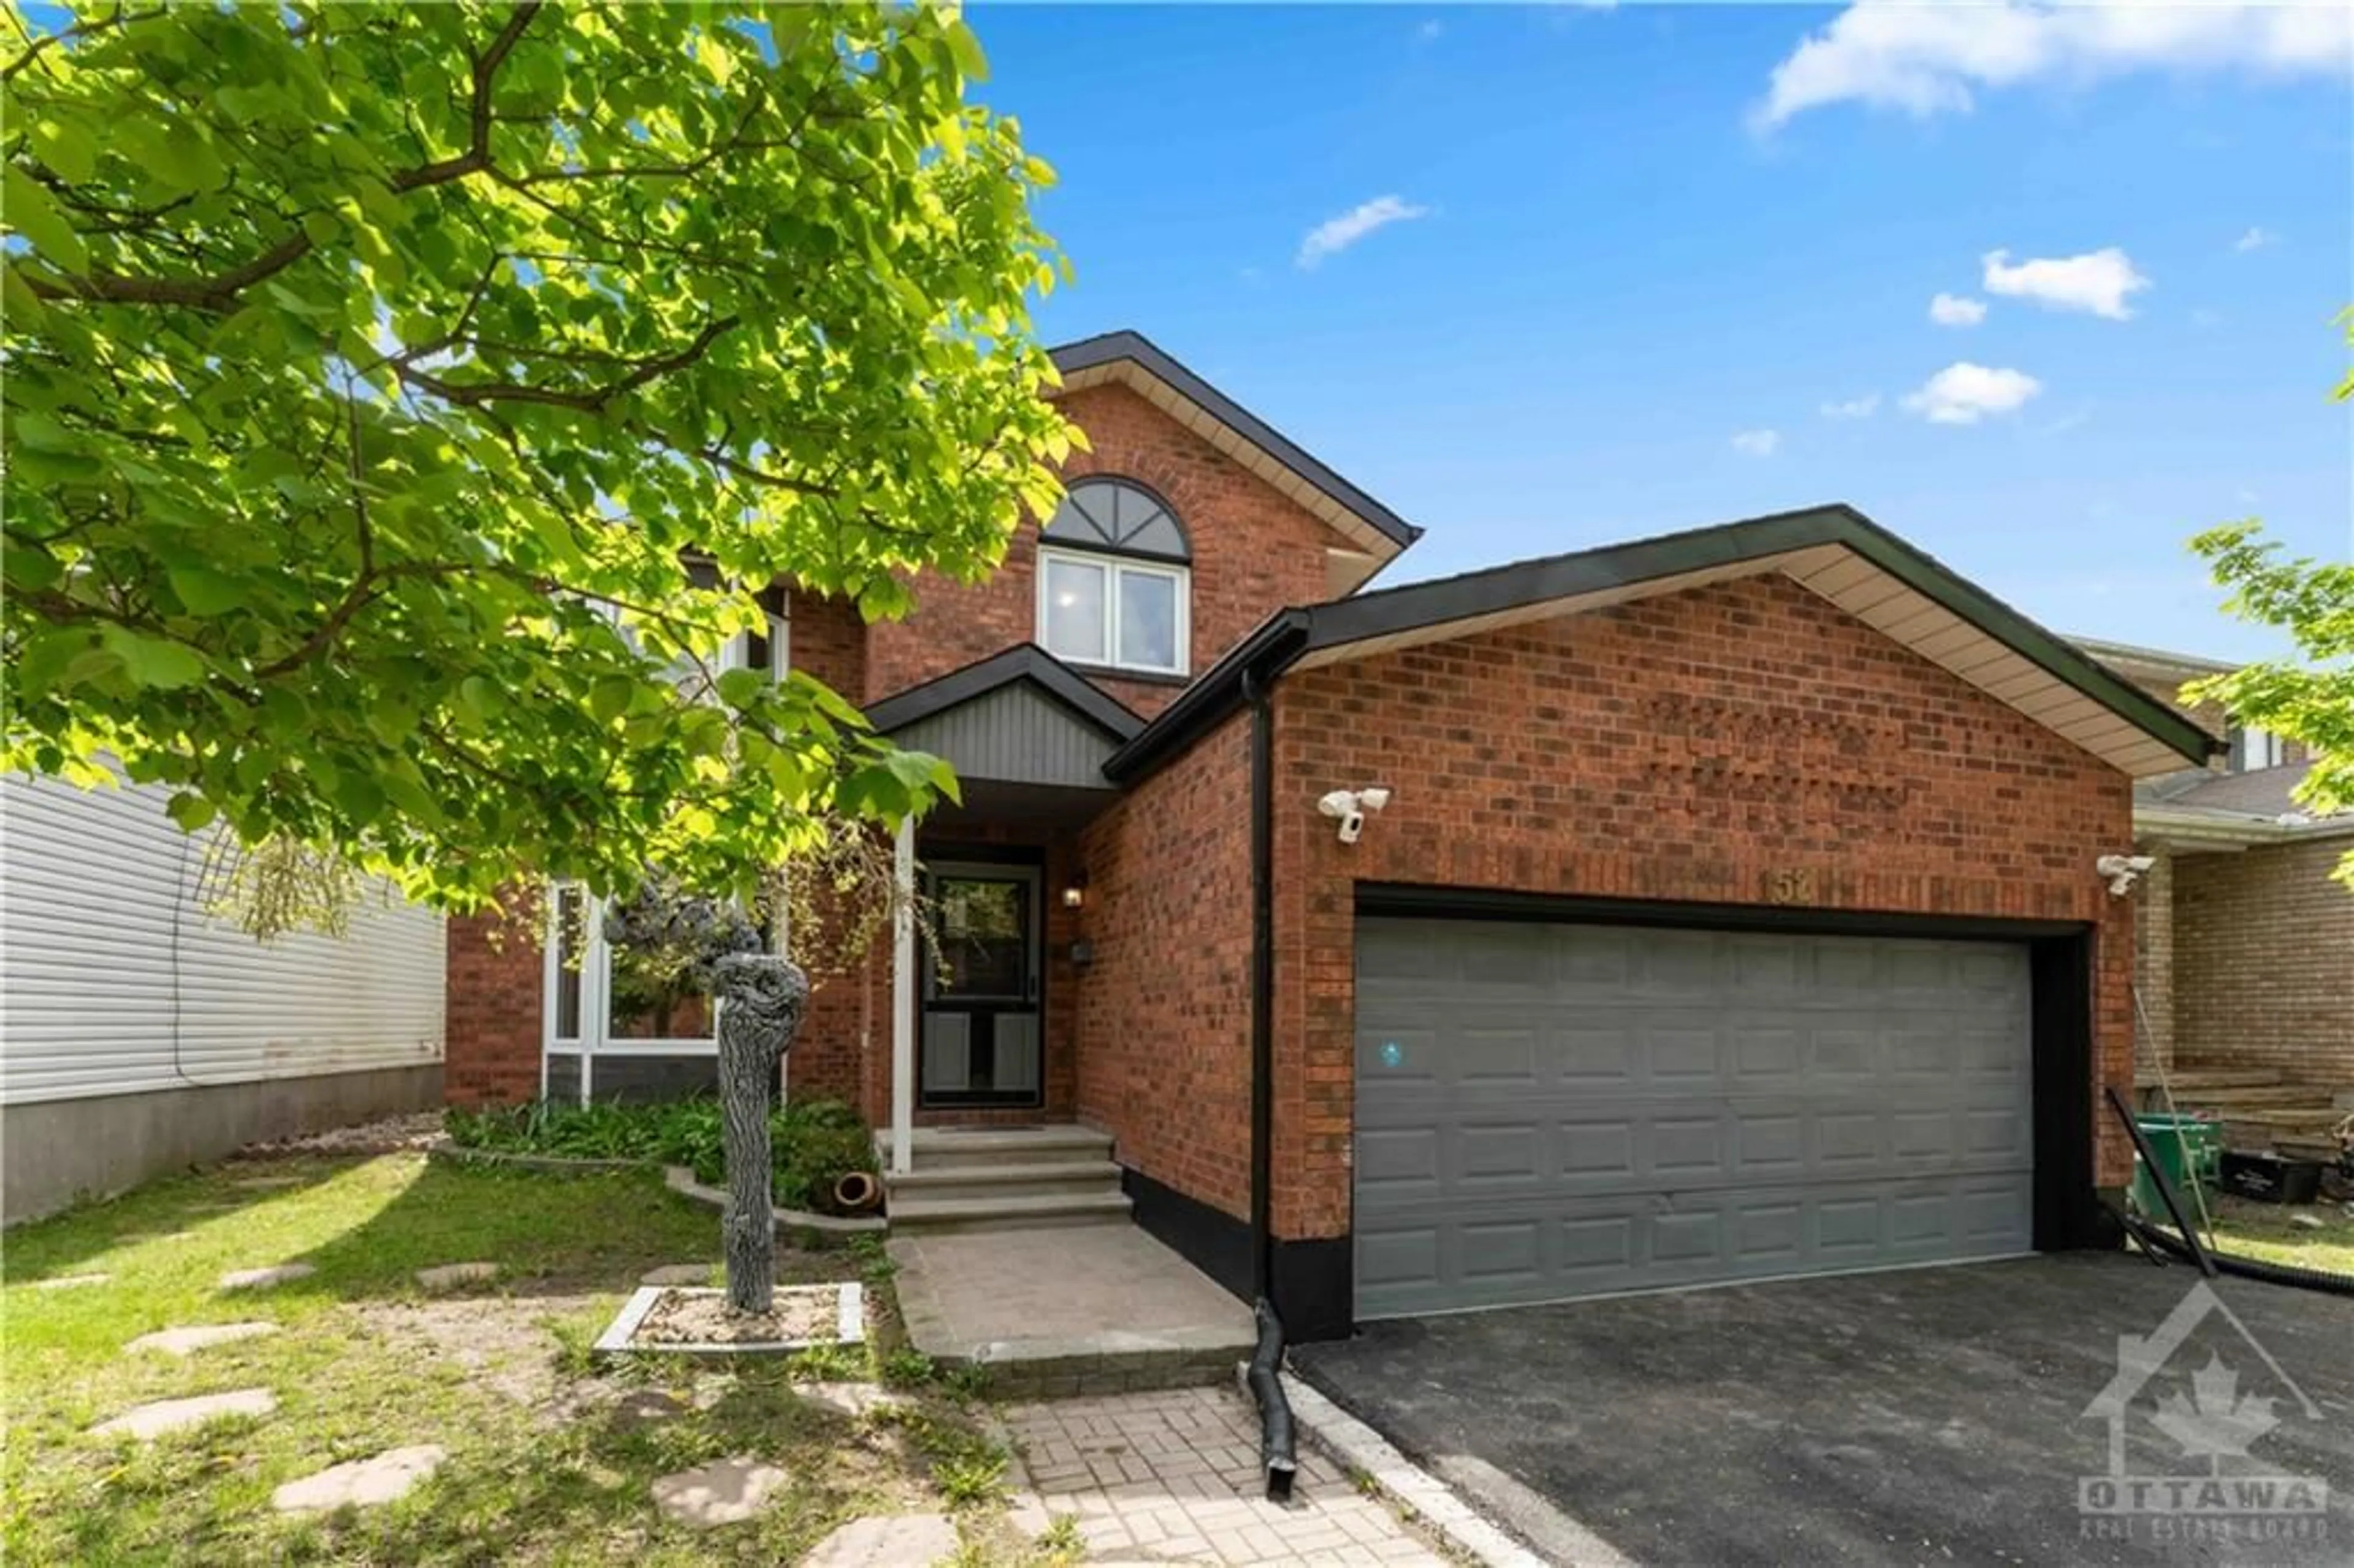 Home with brick exterior material for 152 TWYFORD St, Ottawa Ontario K1V 0V9